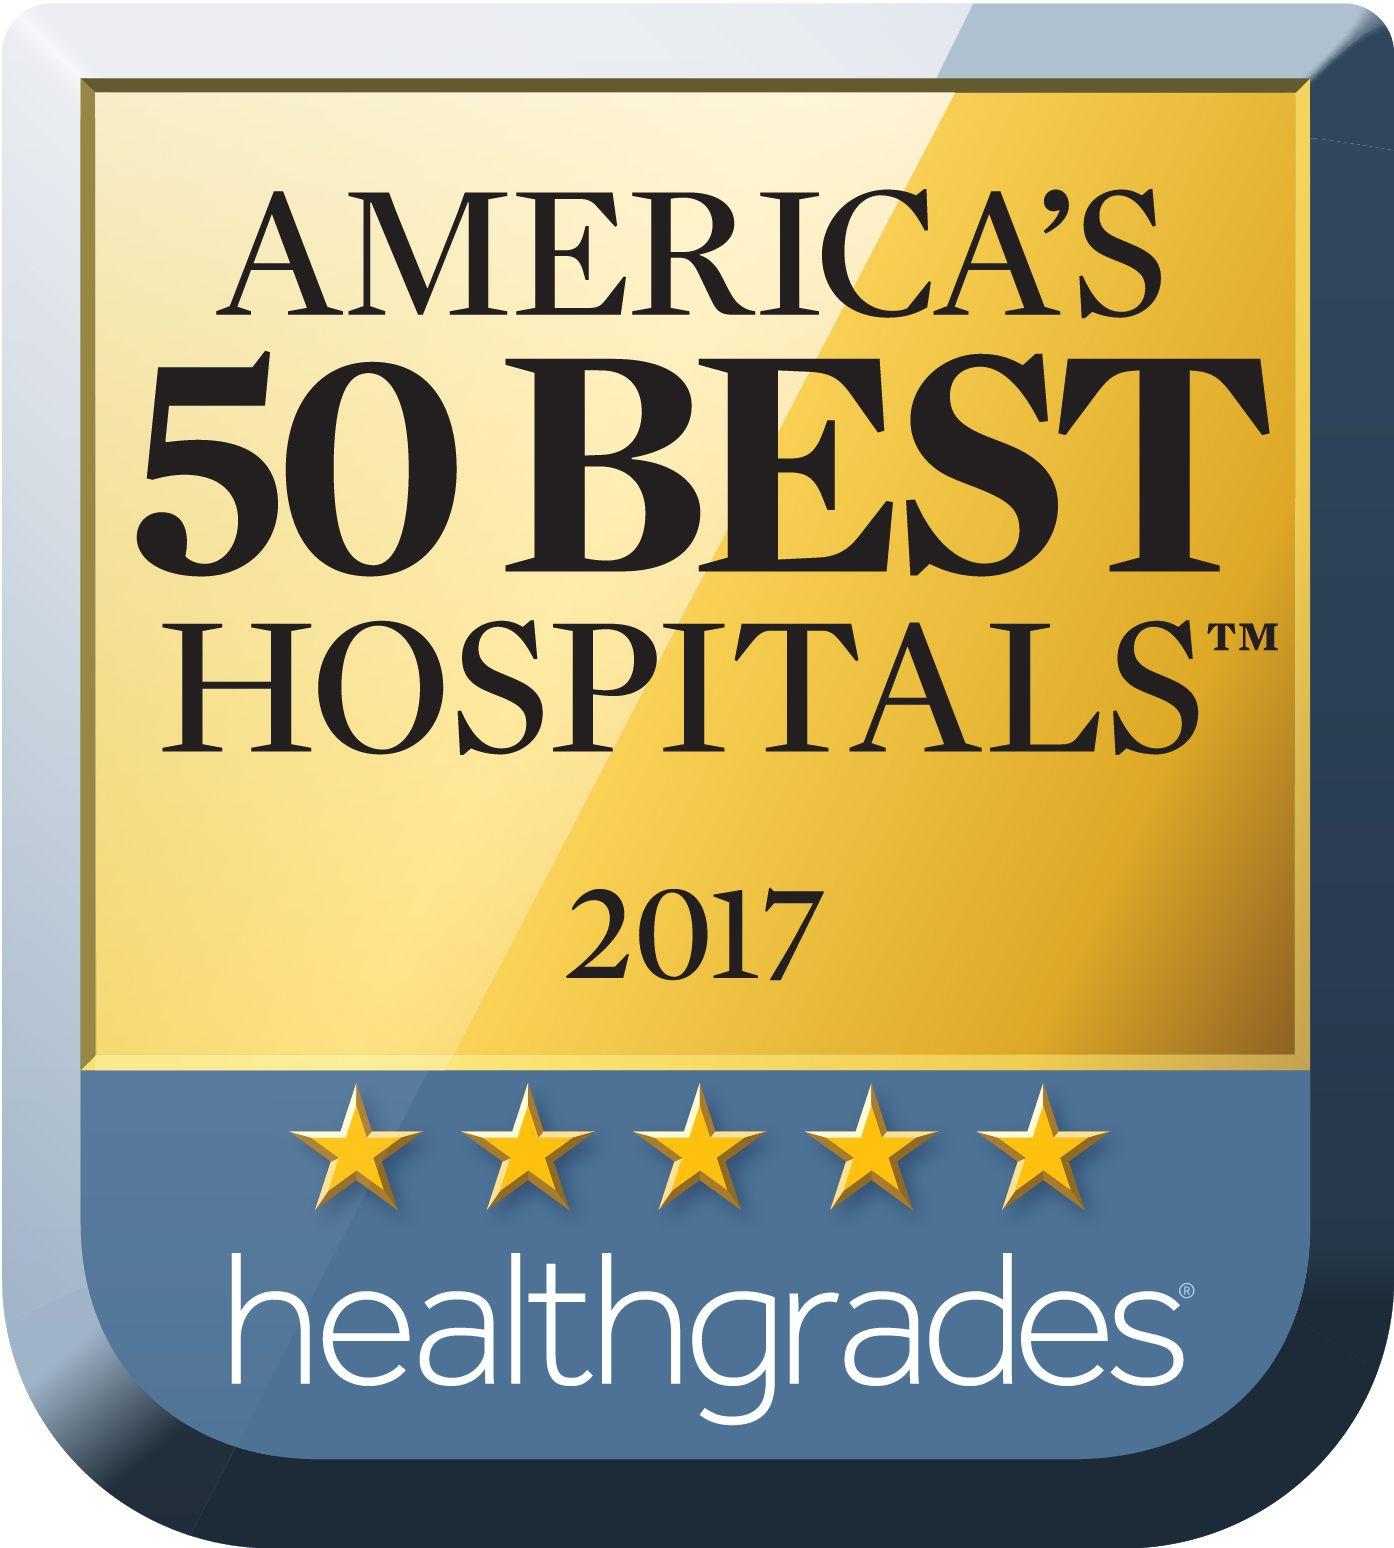 Healthgrades Heart Logo - Healthgrades: Gundersen among America's 50 Best Hospitals ...